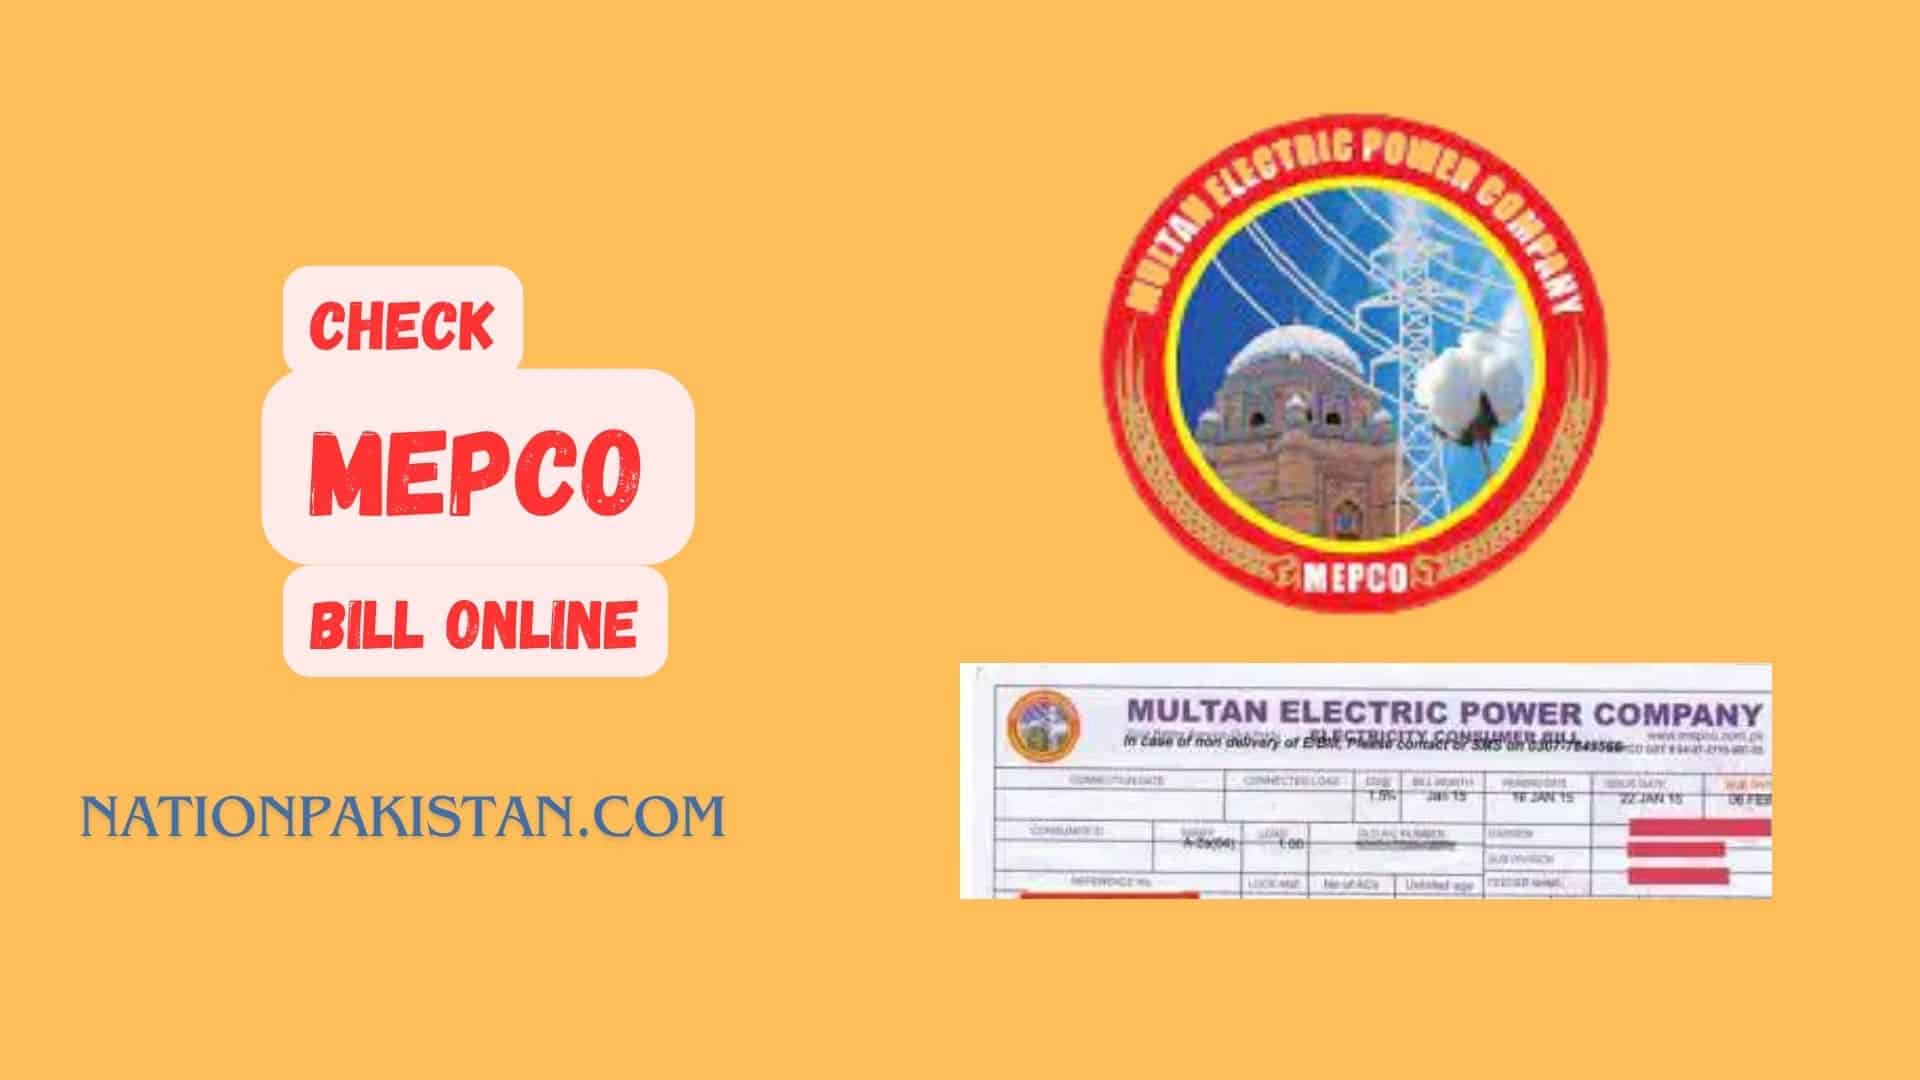 MEPCO Bill Online Check - Download Duplicate Copy.